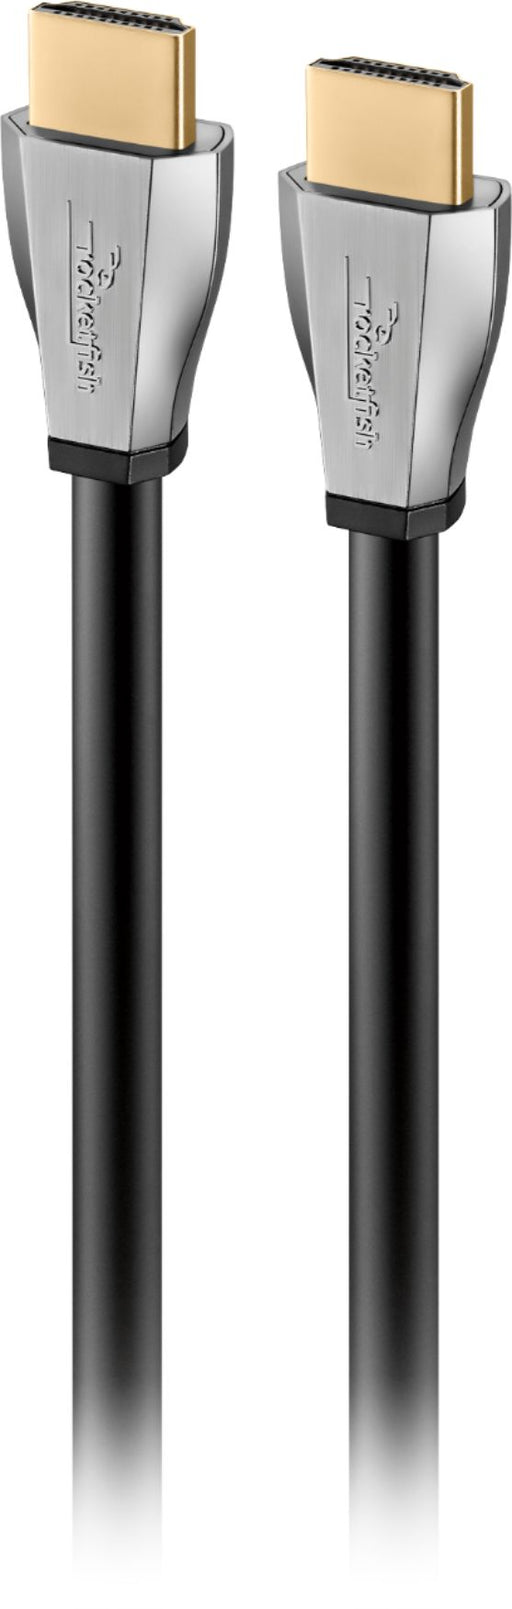 Rocketfish - 4' 4K UltraHD/HDR In-Wall Rated HDMI Cable - Black